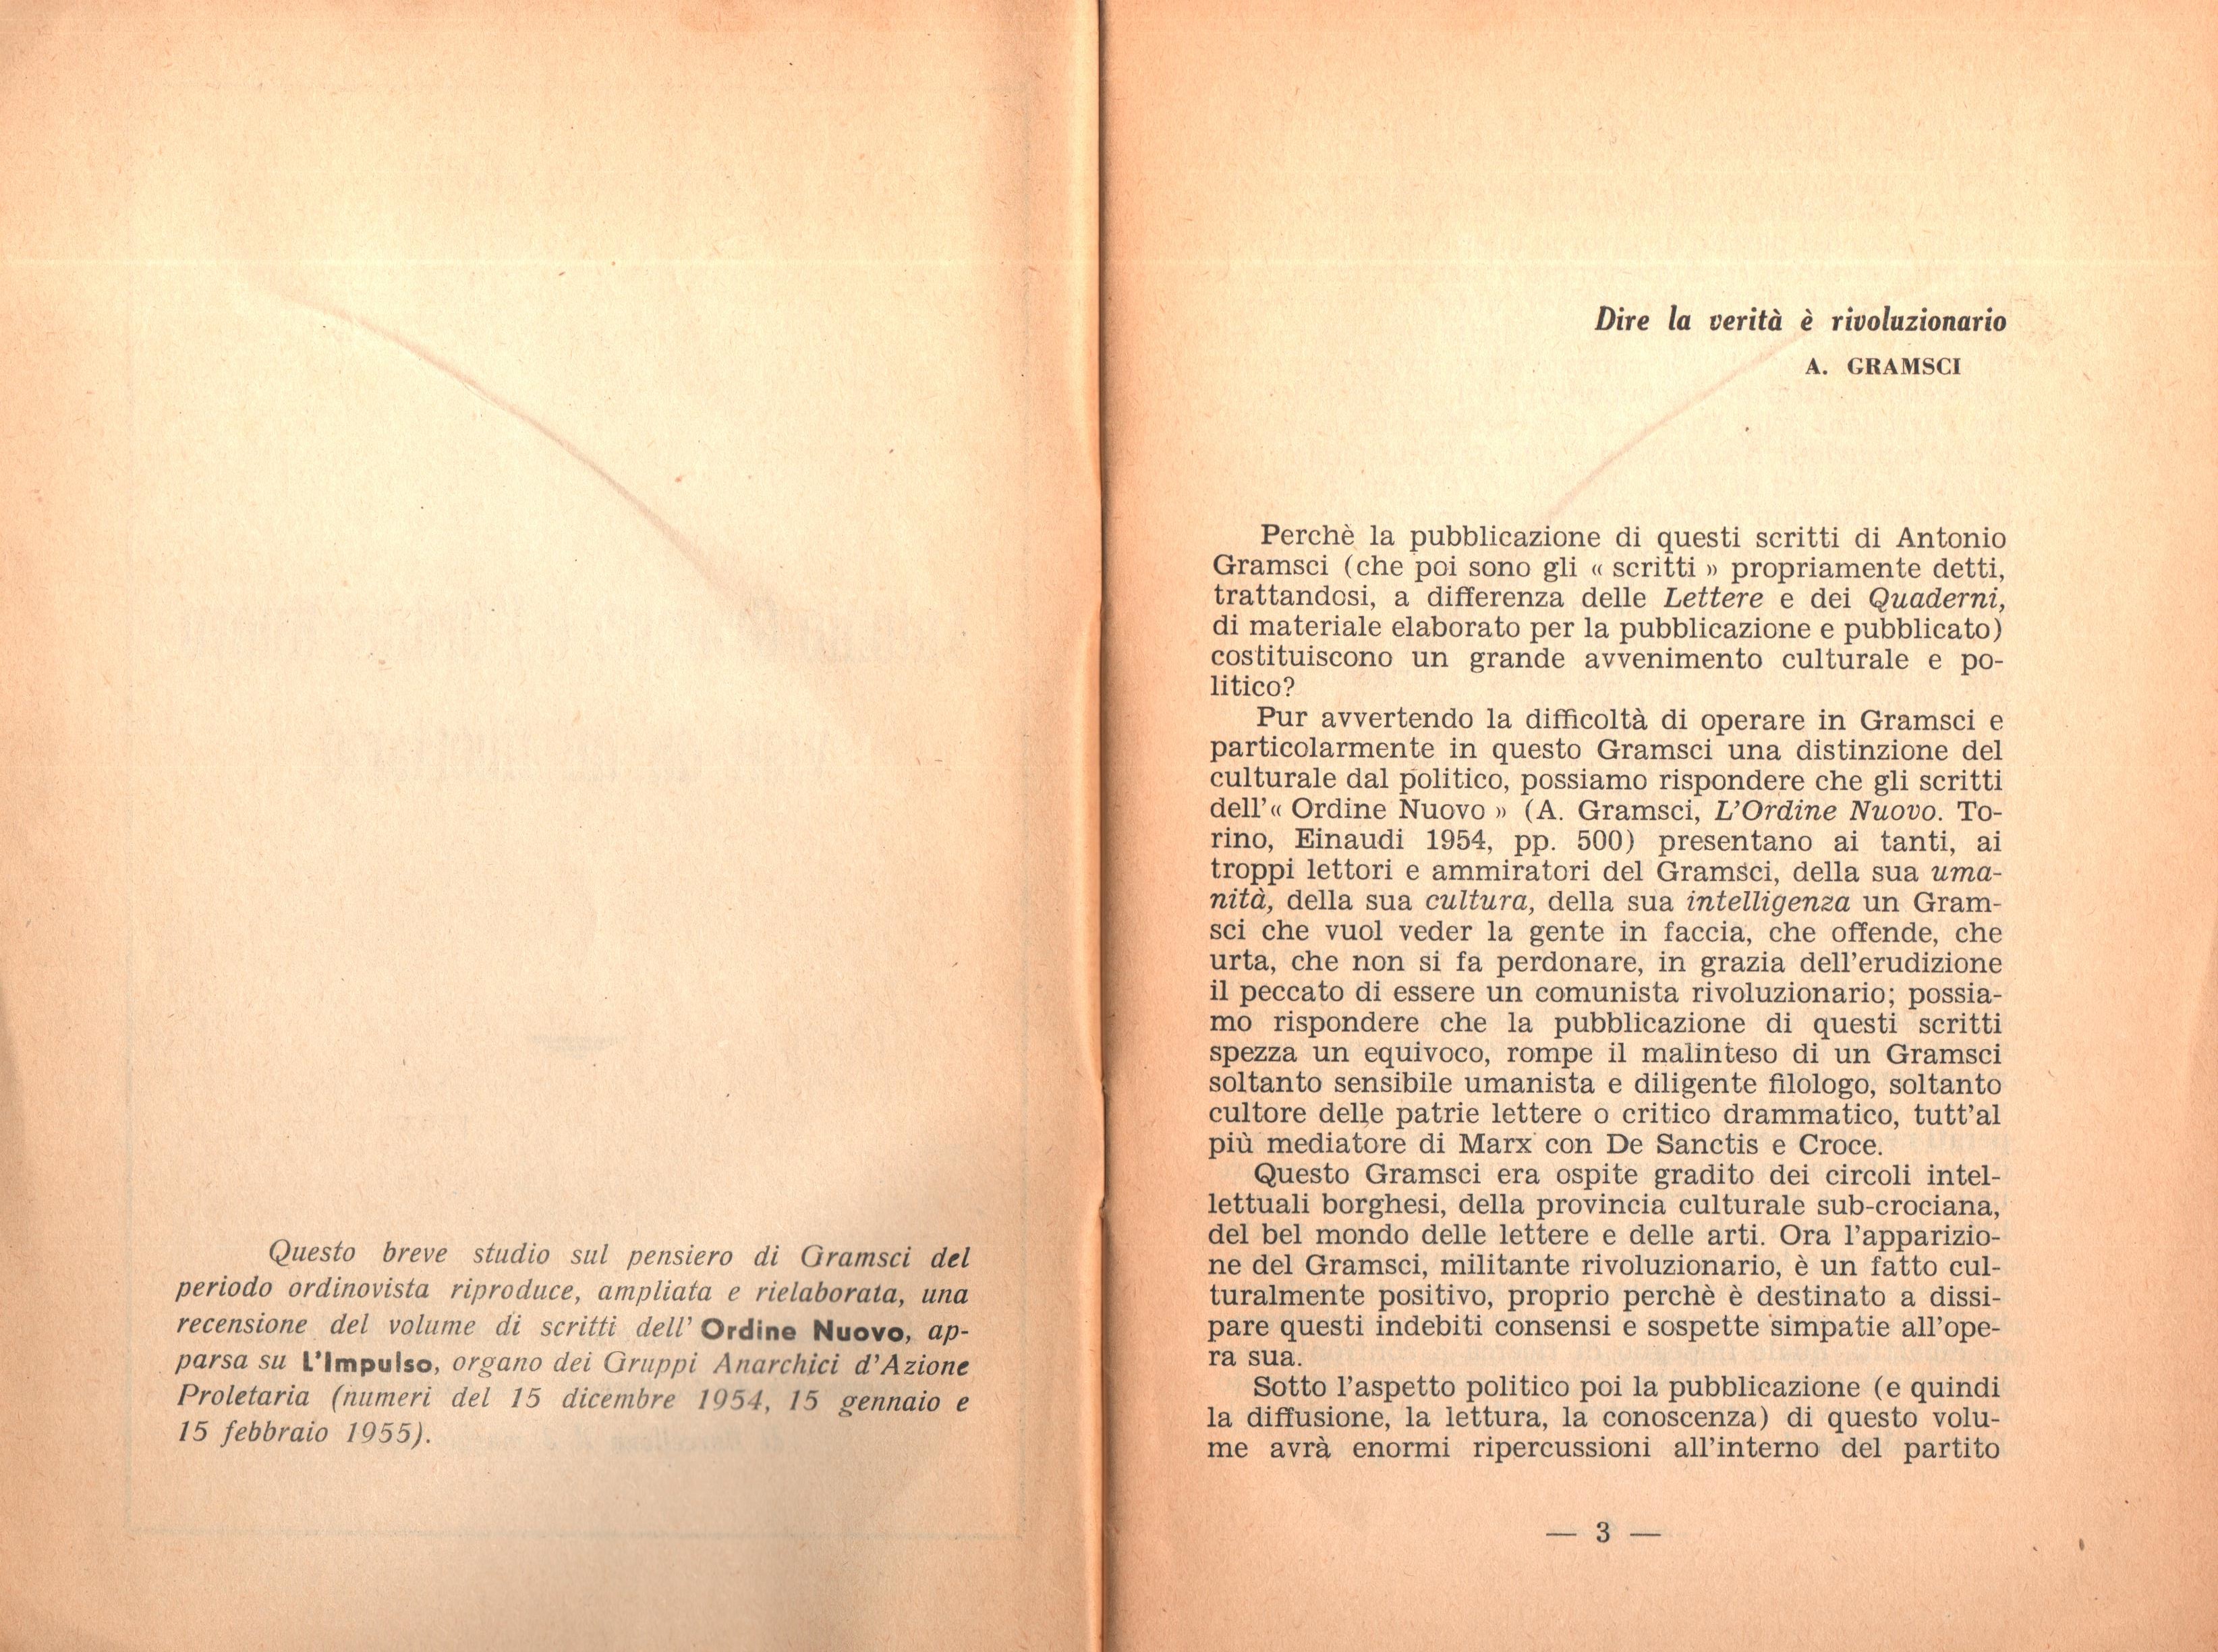 Pier Carlo Masini, Antonio Gramsci - pag. 3